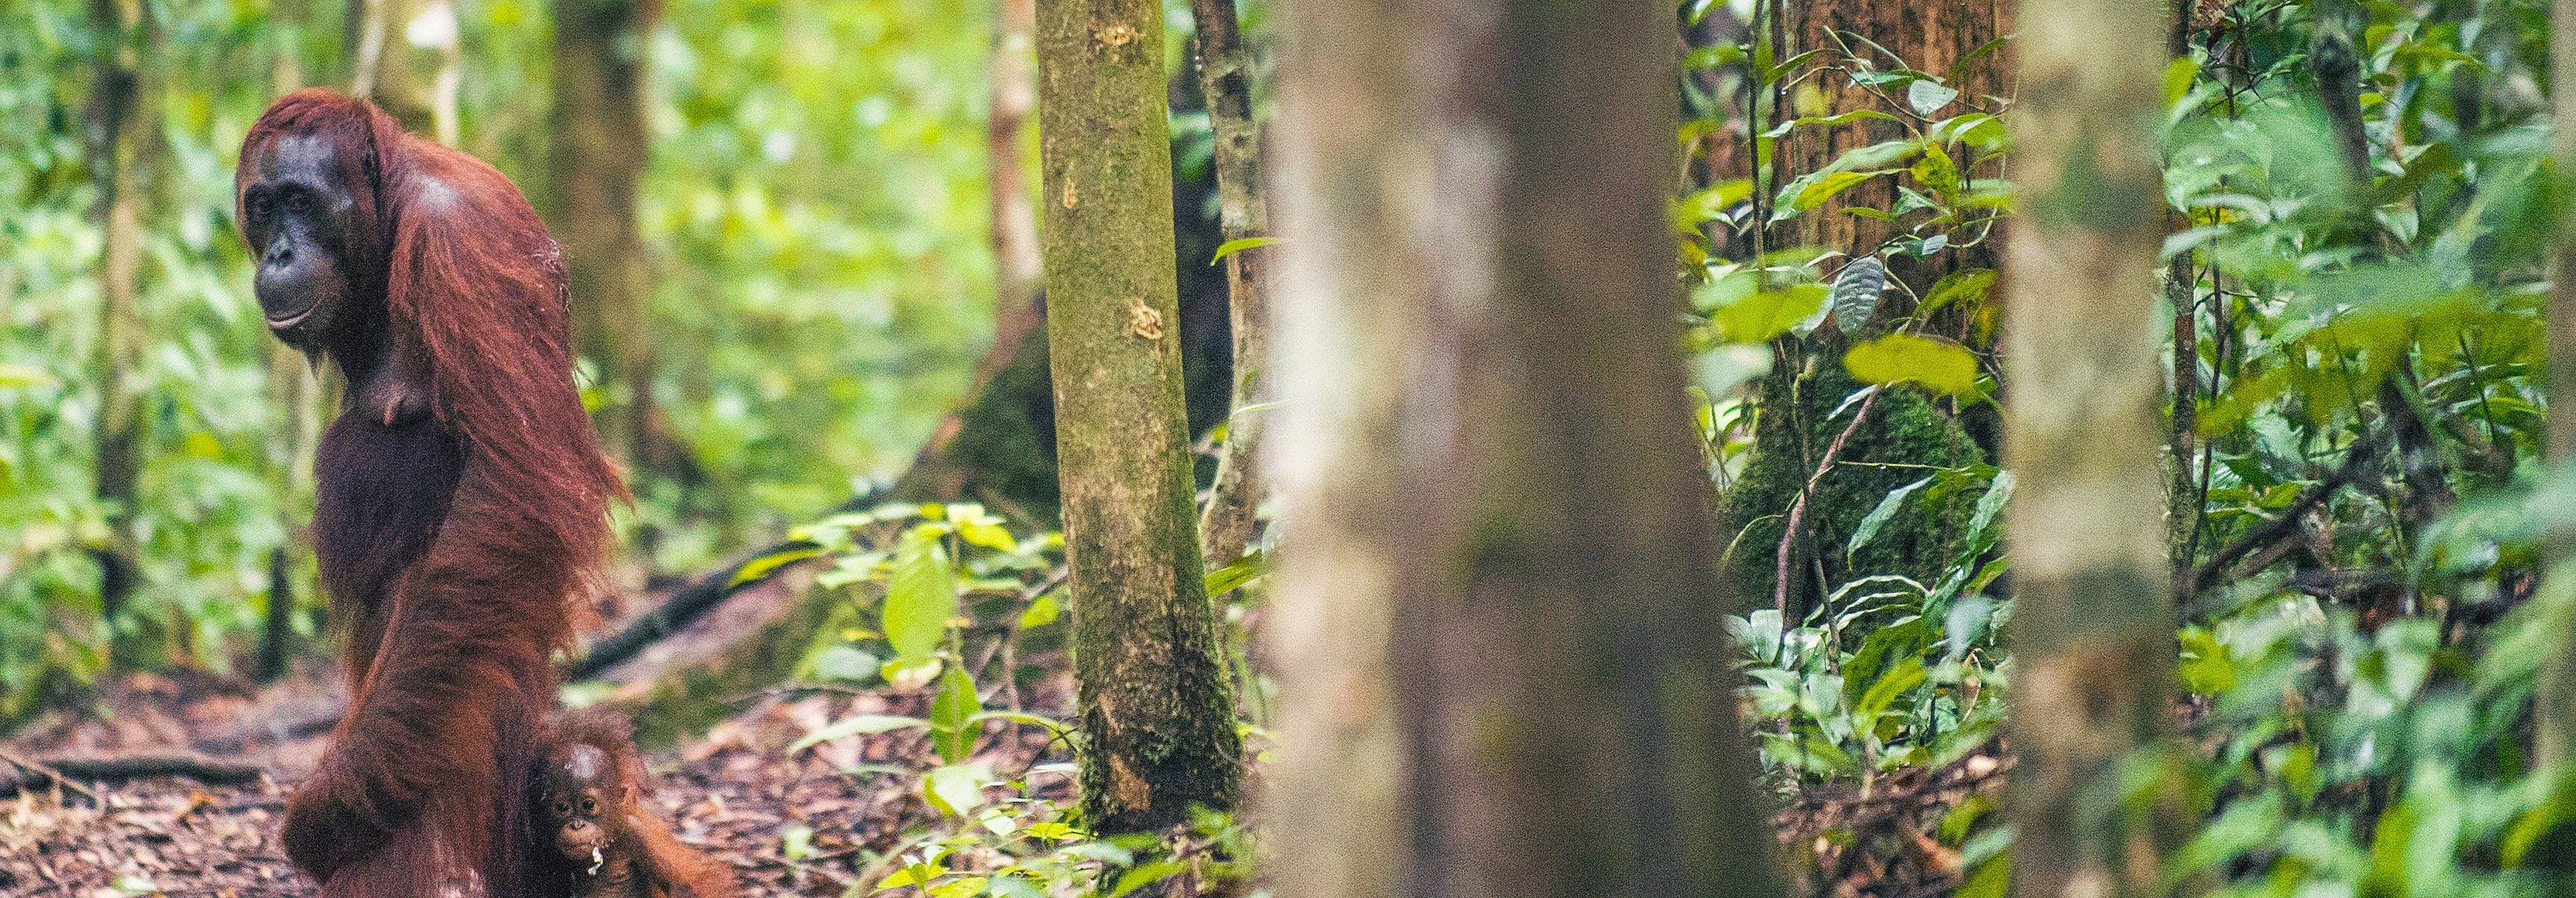 A female of the orangutan with a cub in a natural habitat. R